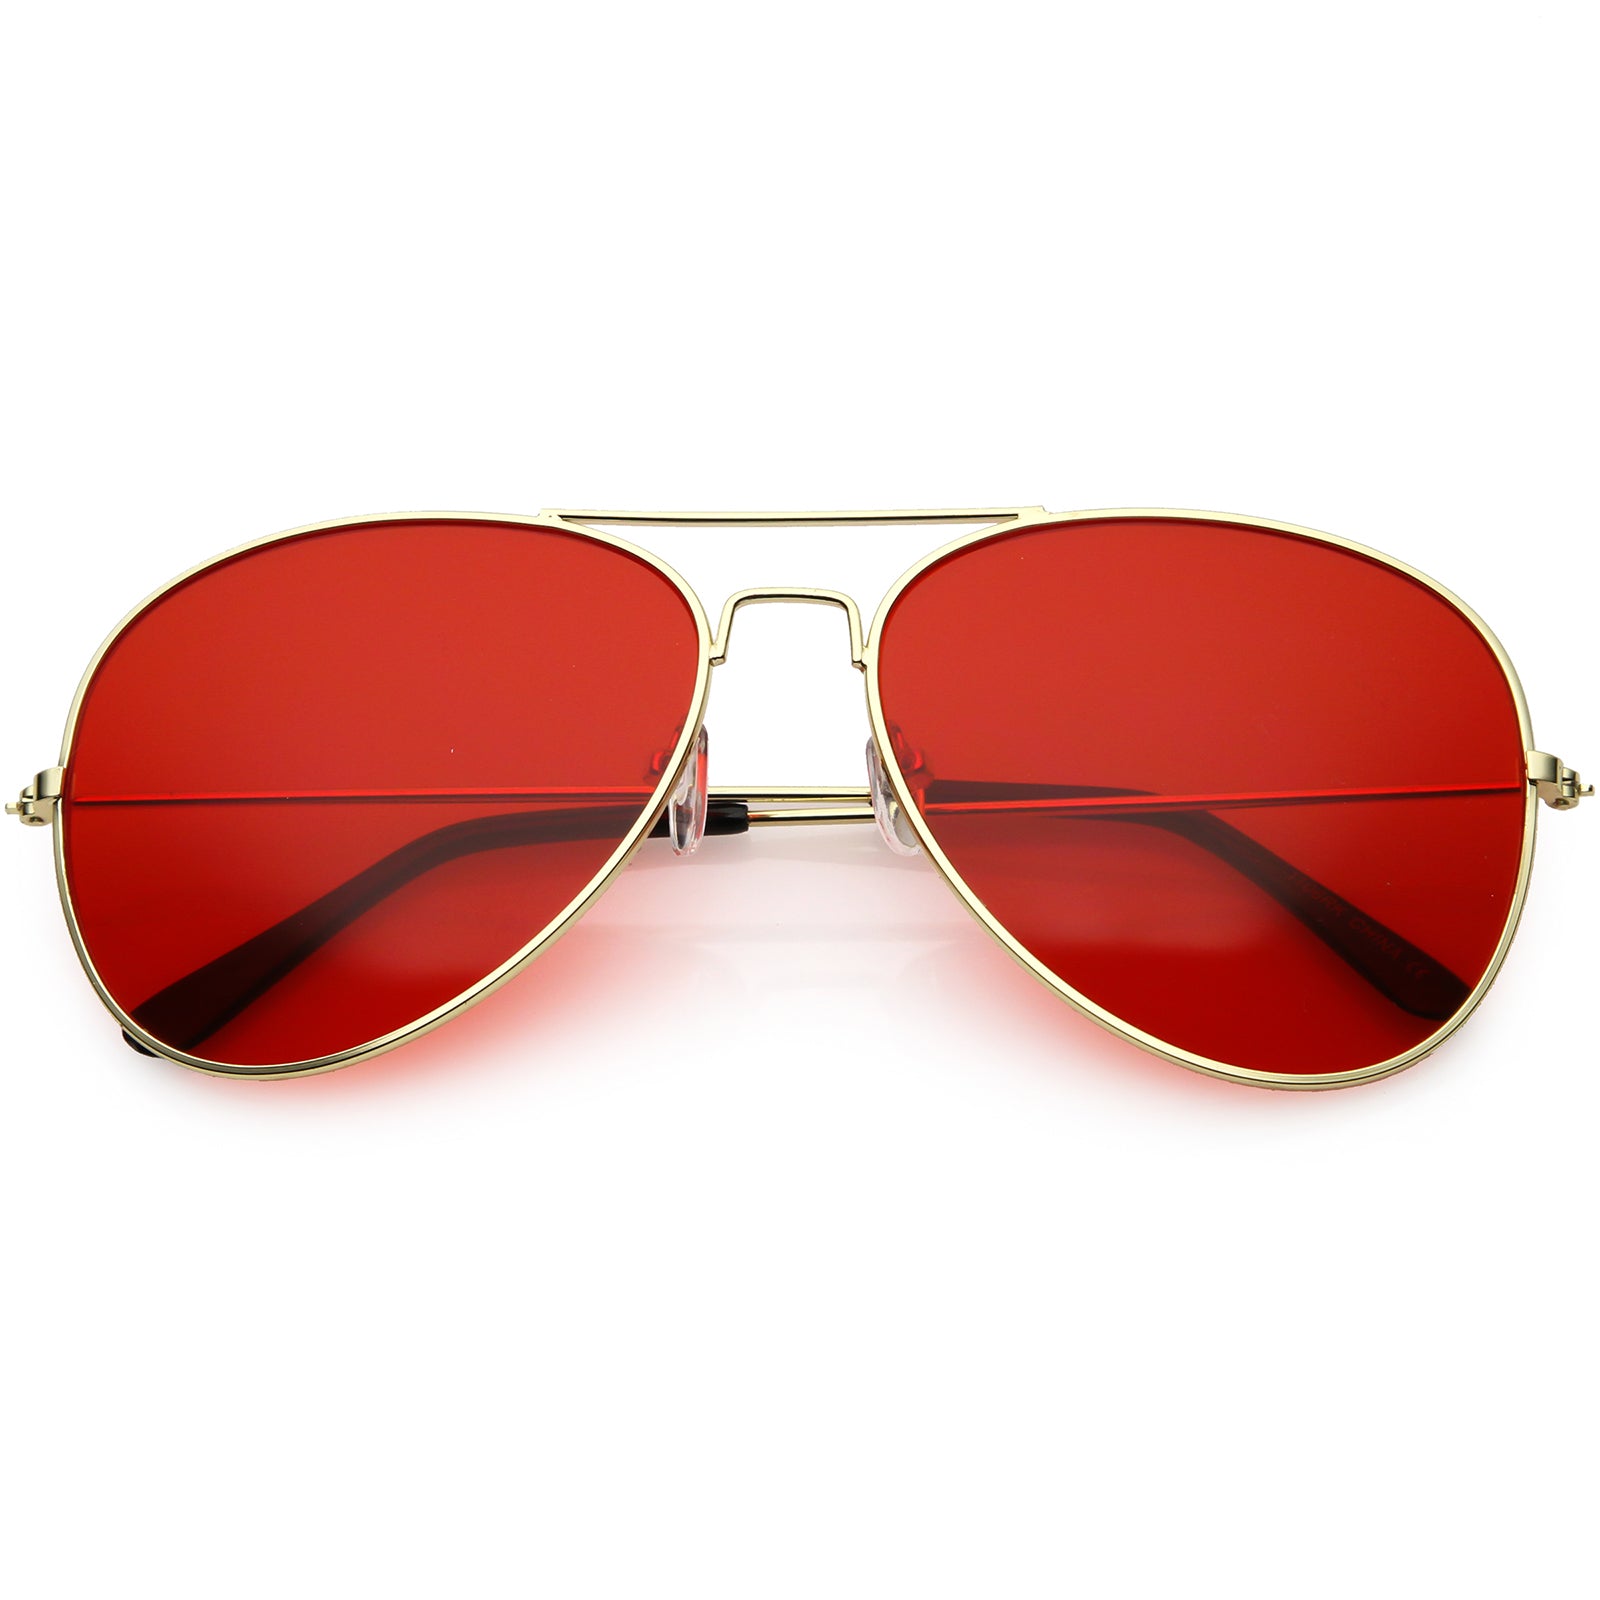 Stuepige Mægtig Playful Large Metal Aviator Red Tinted Lens Sunglasses 58mm - sunglass.la